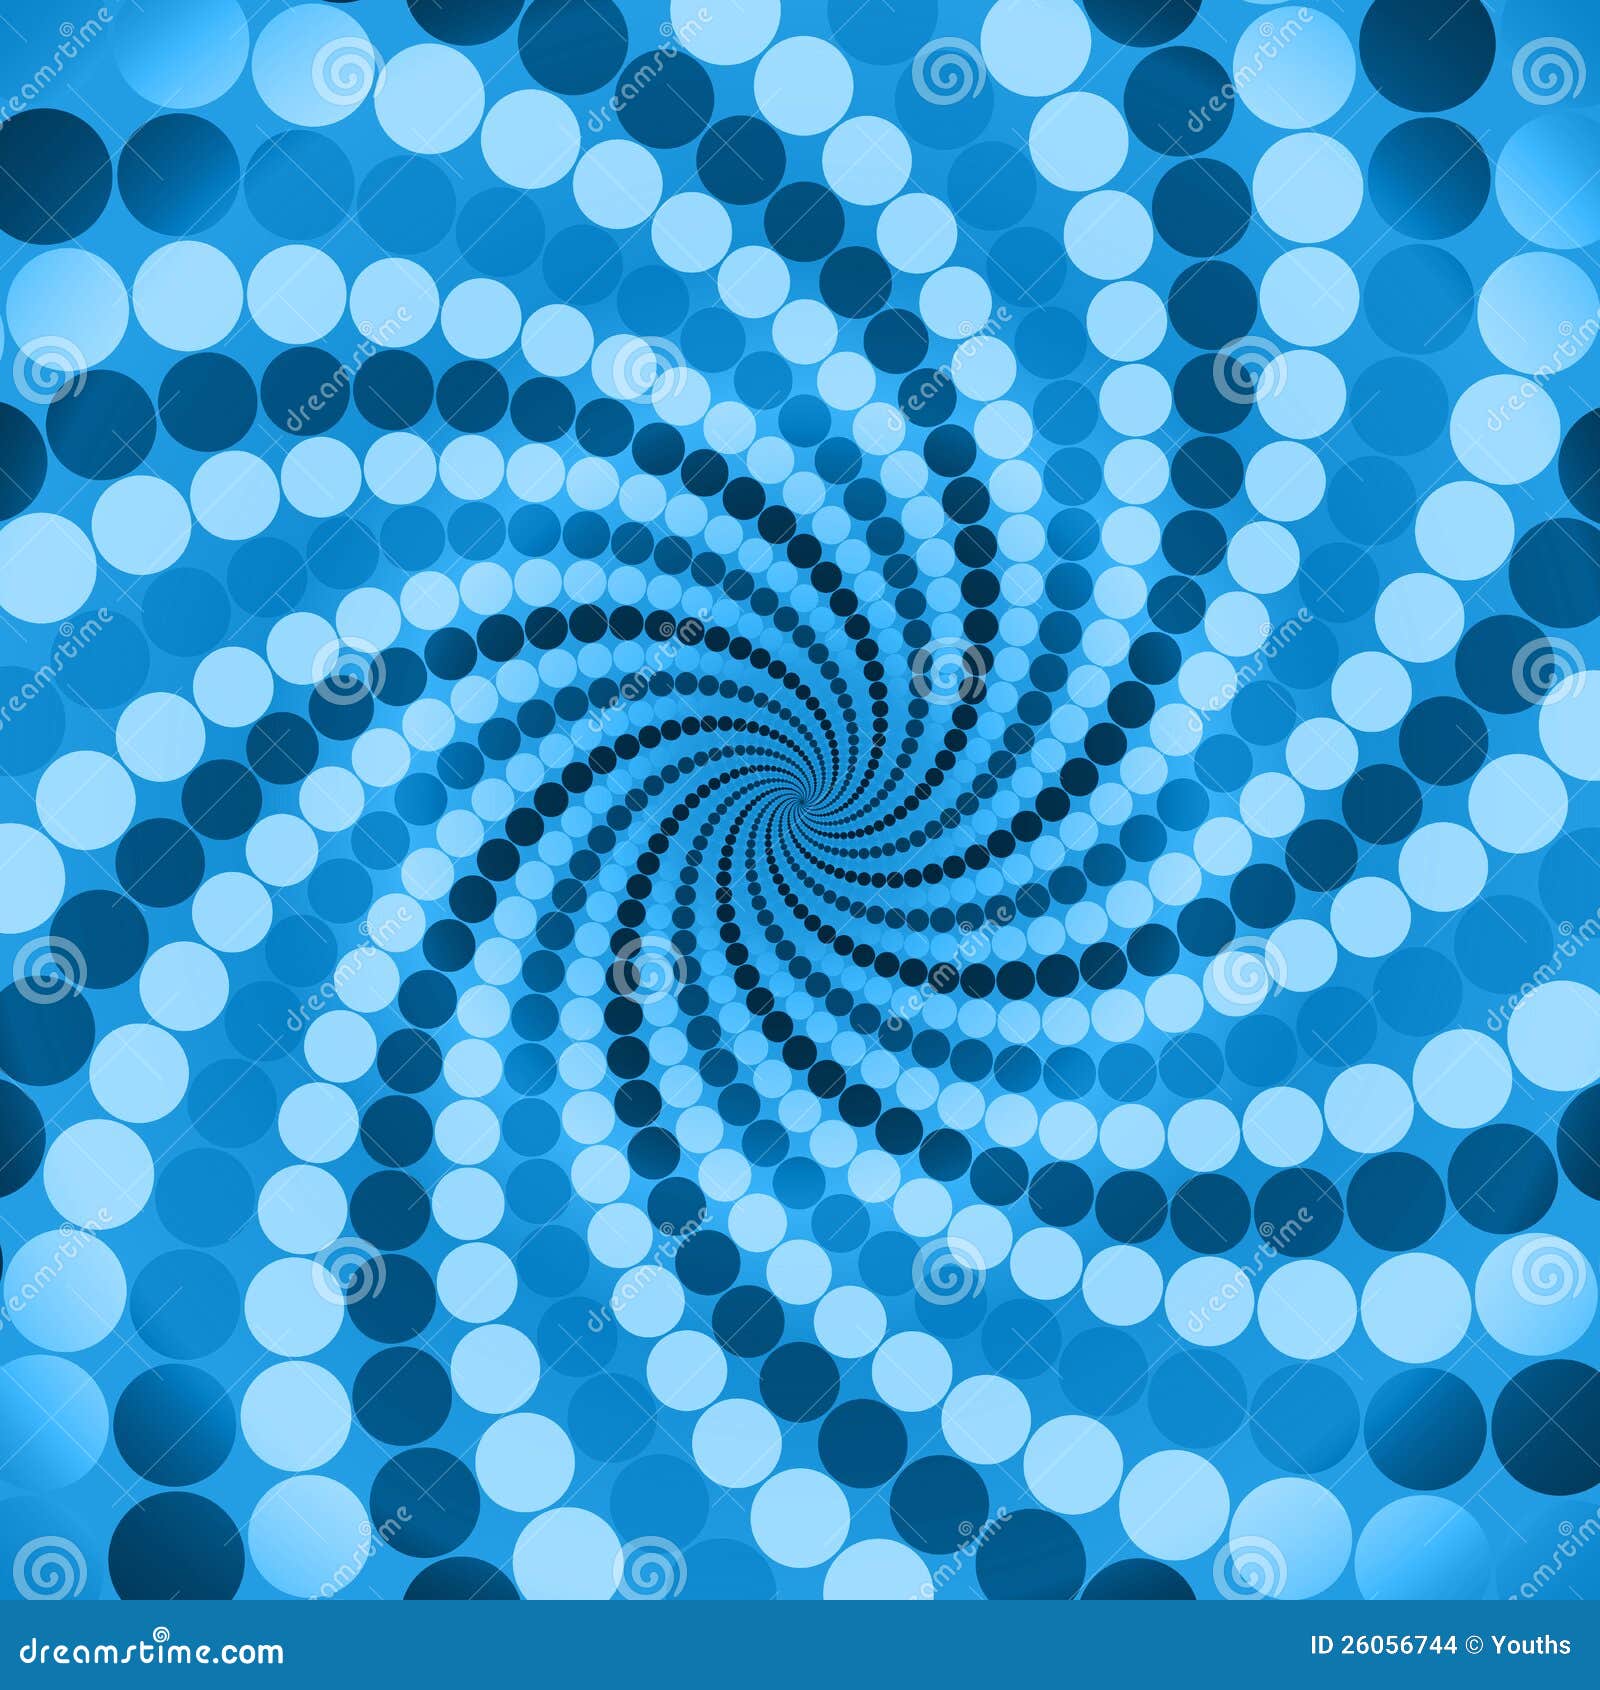 cyclic optical illusion